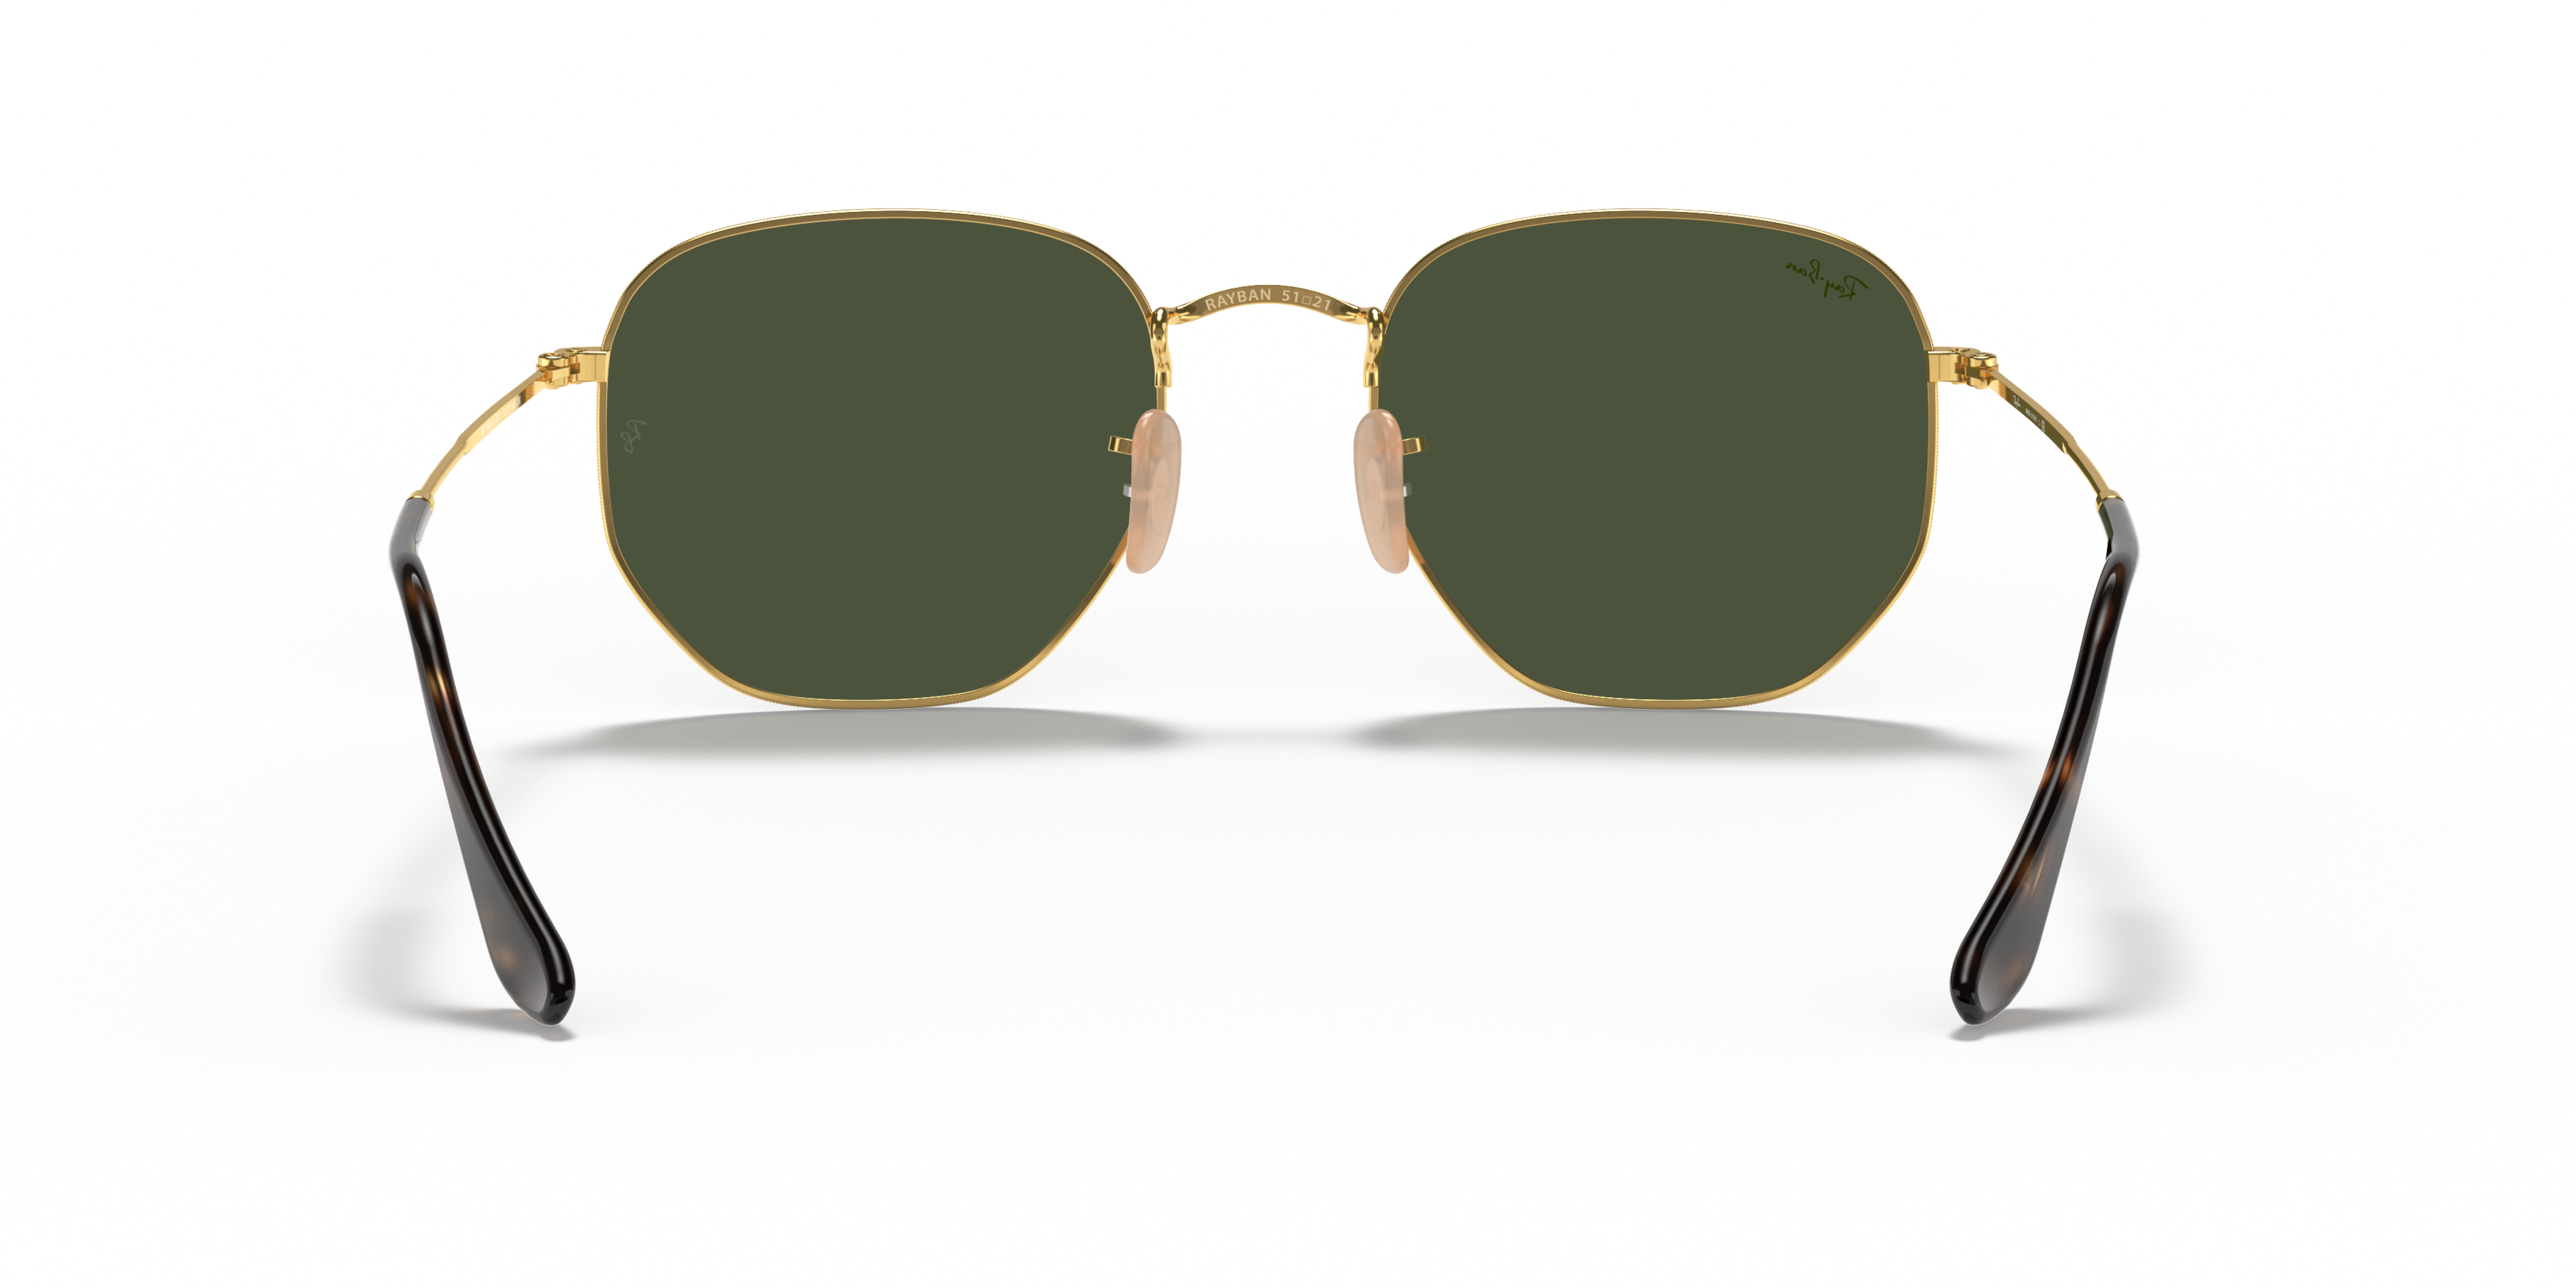 Detail02 Ray-Ban Hexagonal RB 3548N (001) Sunglasses Green / Gold